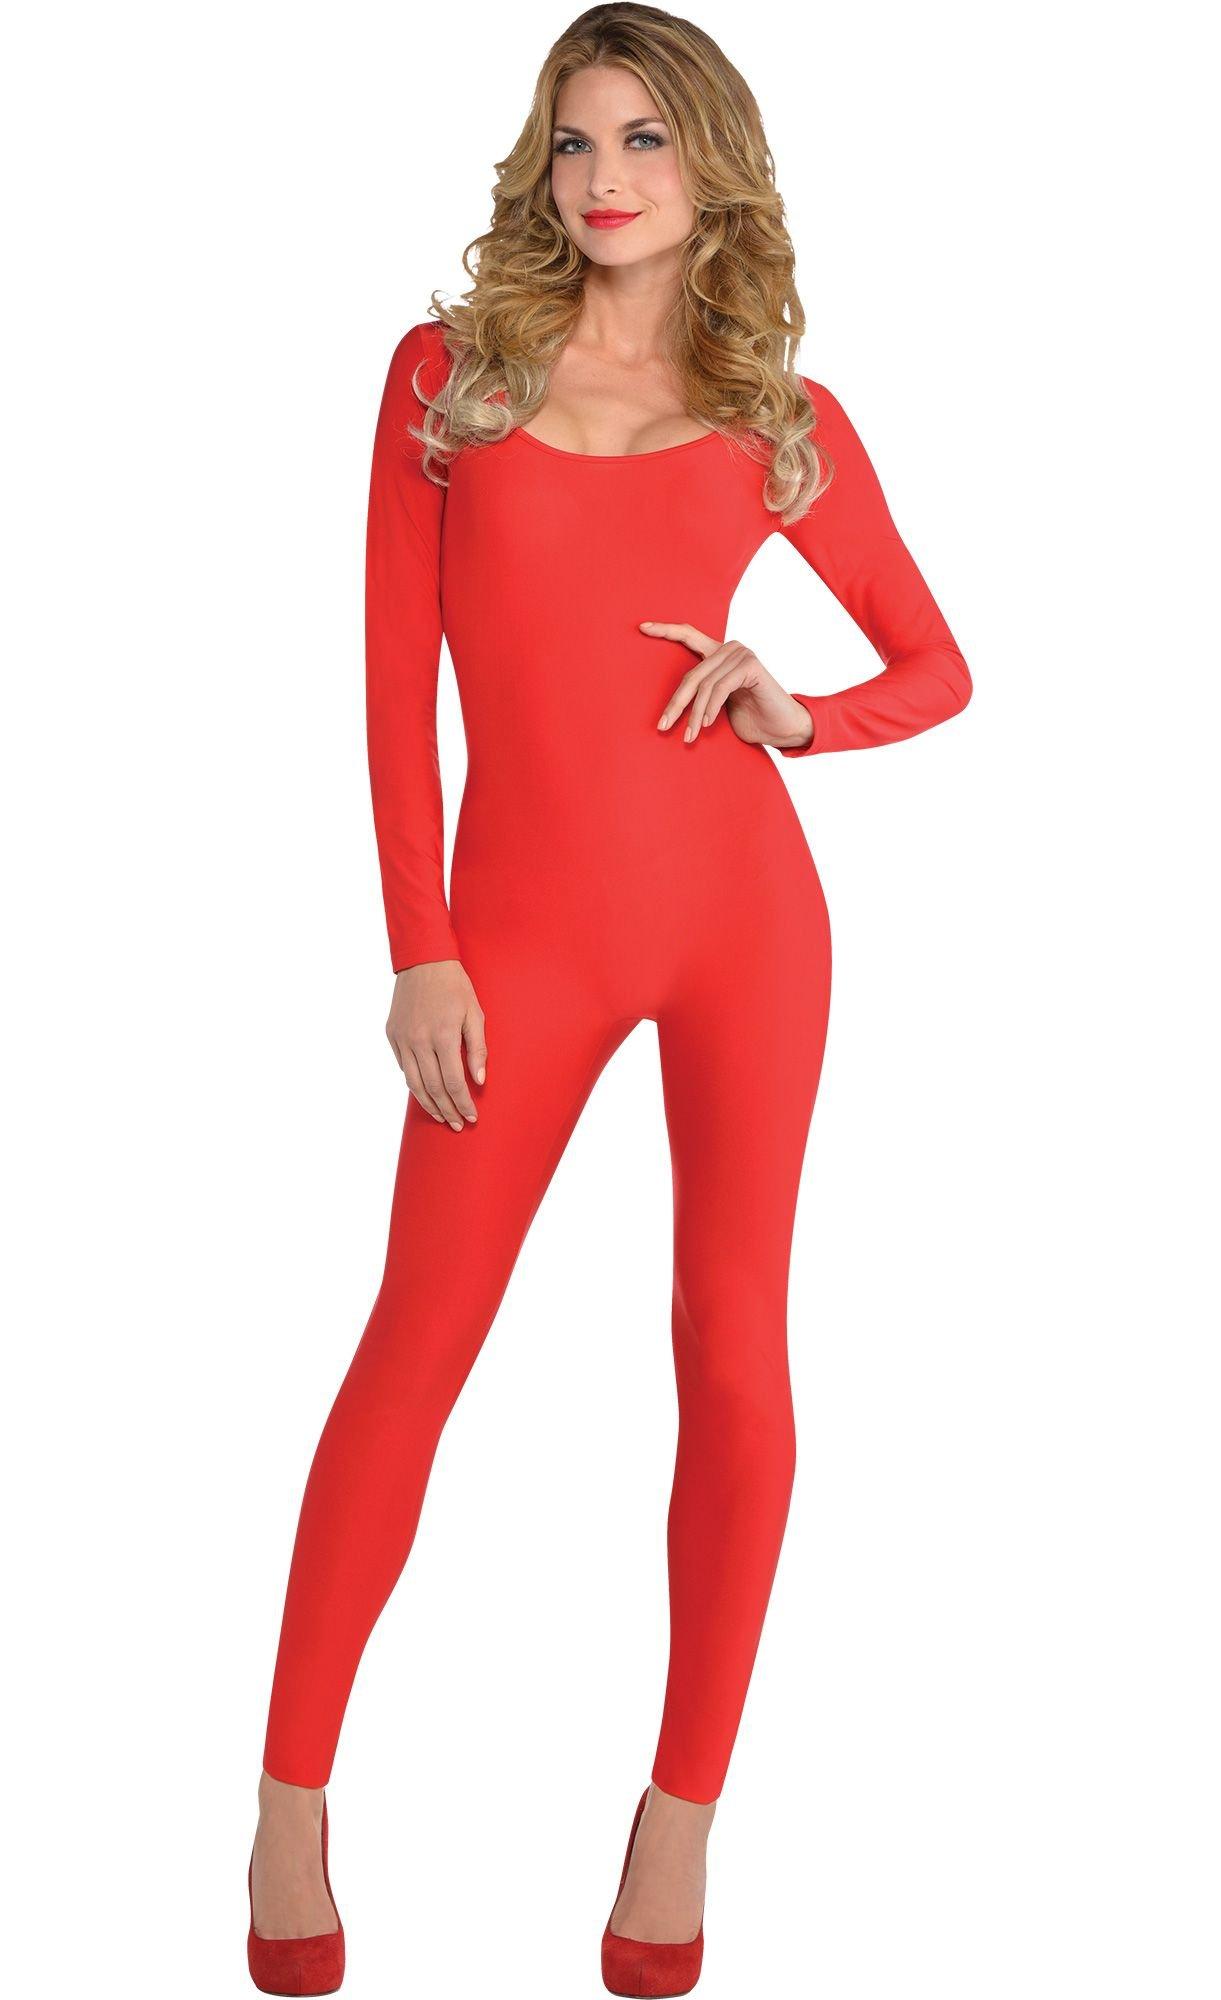 Adult Red Bodysuit Woman Creative Costume